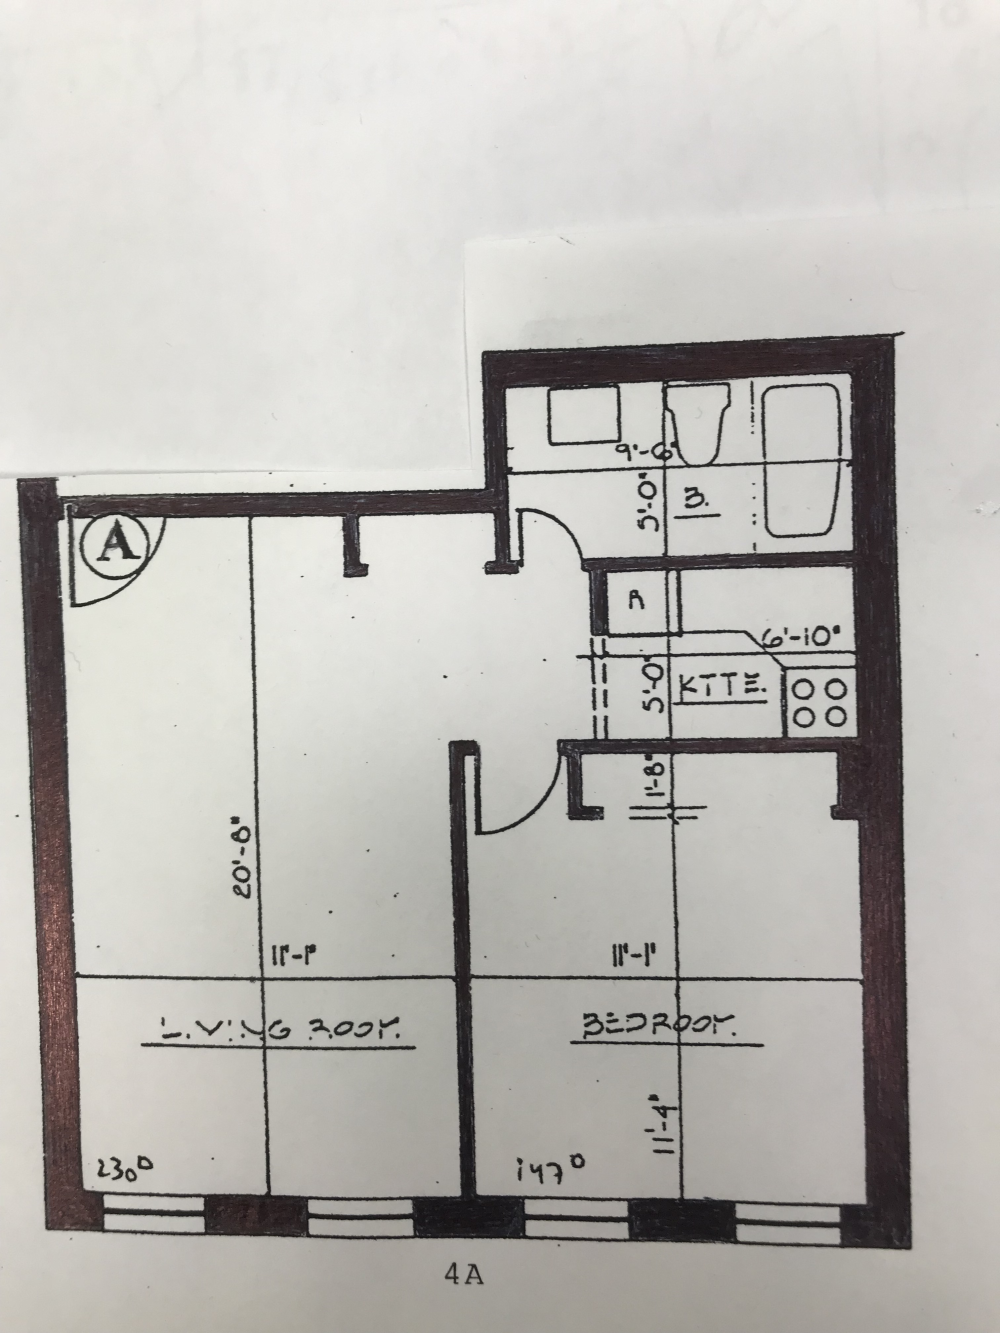 Floorplan for 507 East 12th Street, 4A